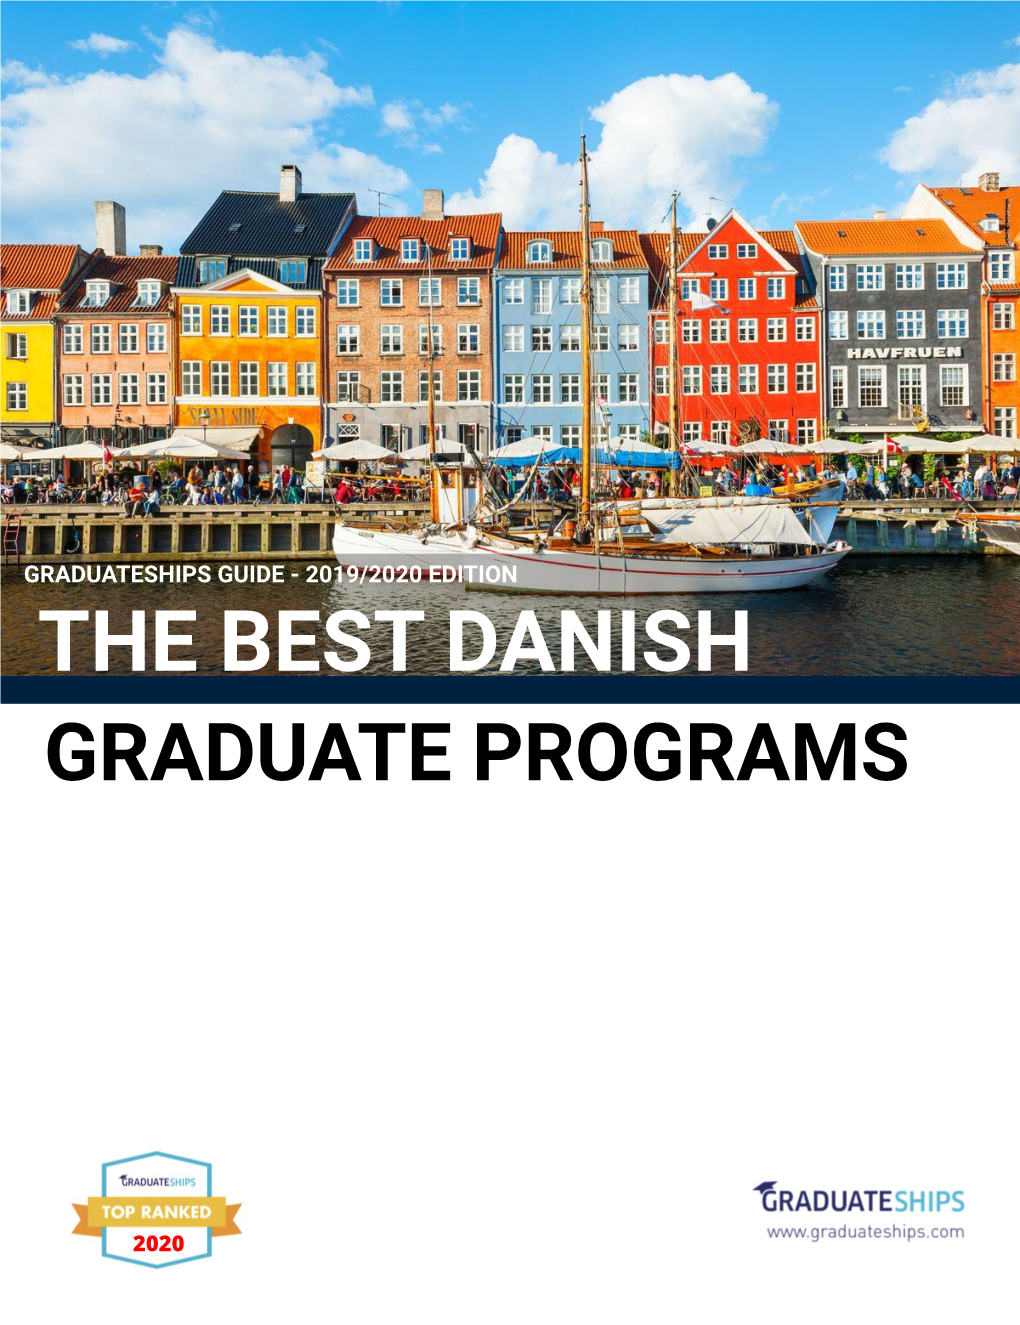 The Best Danish Graduate Programs